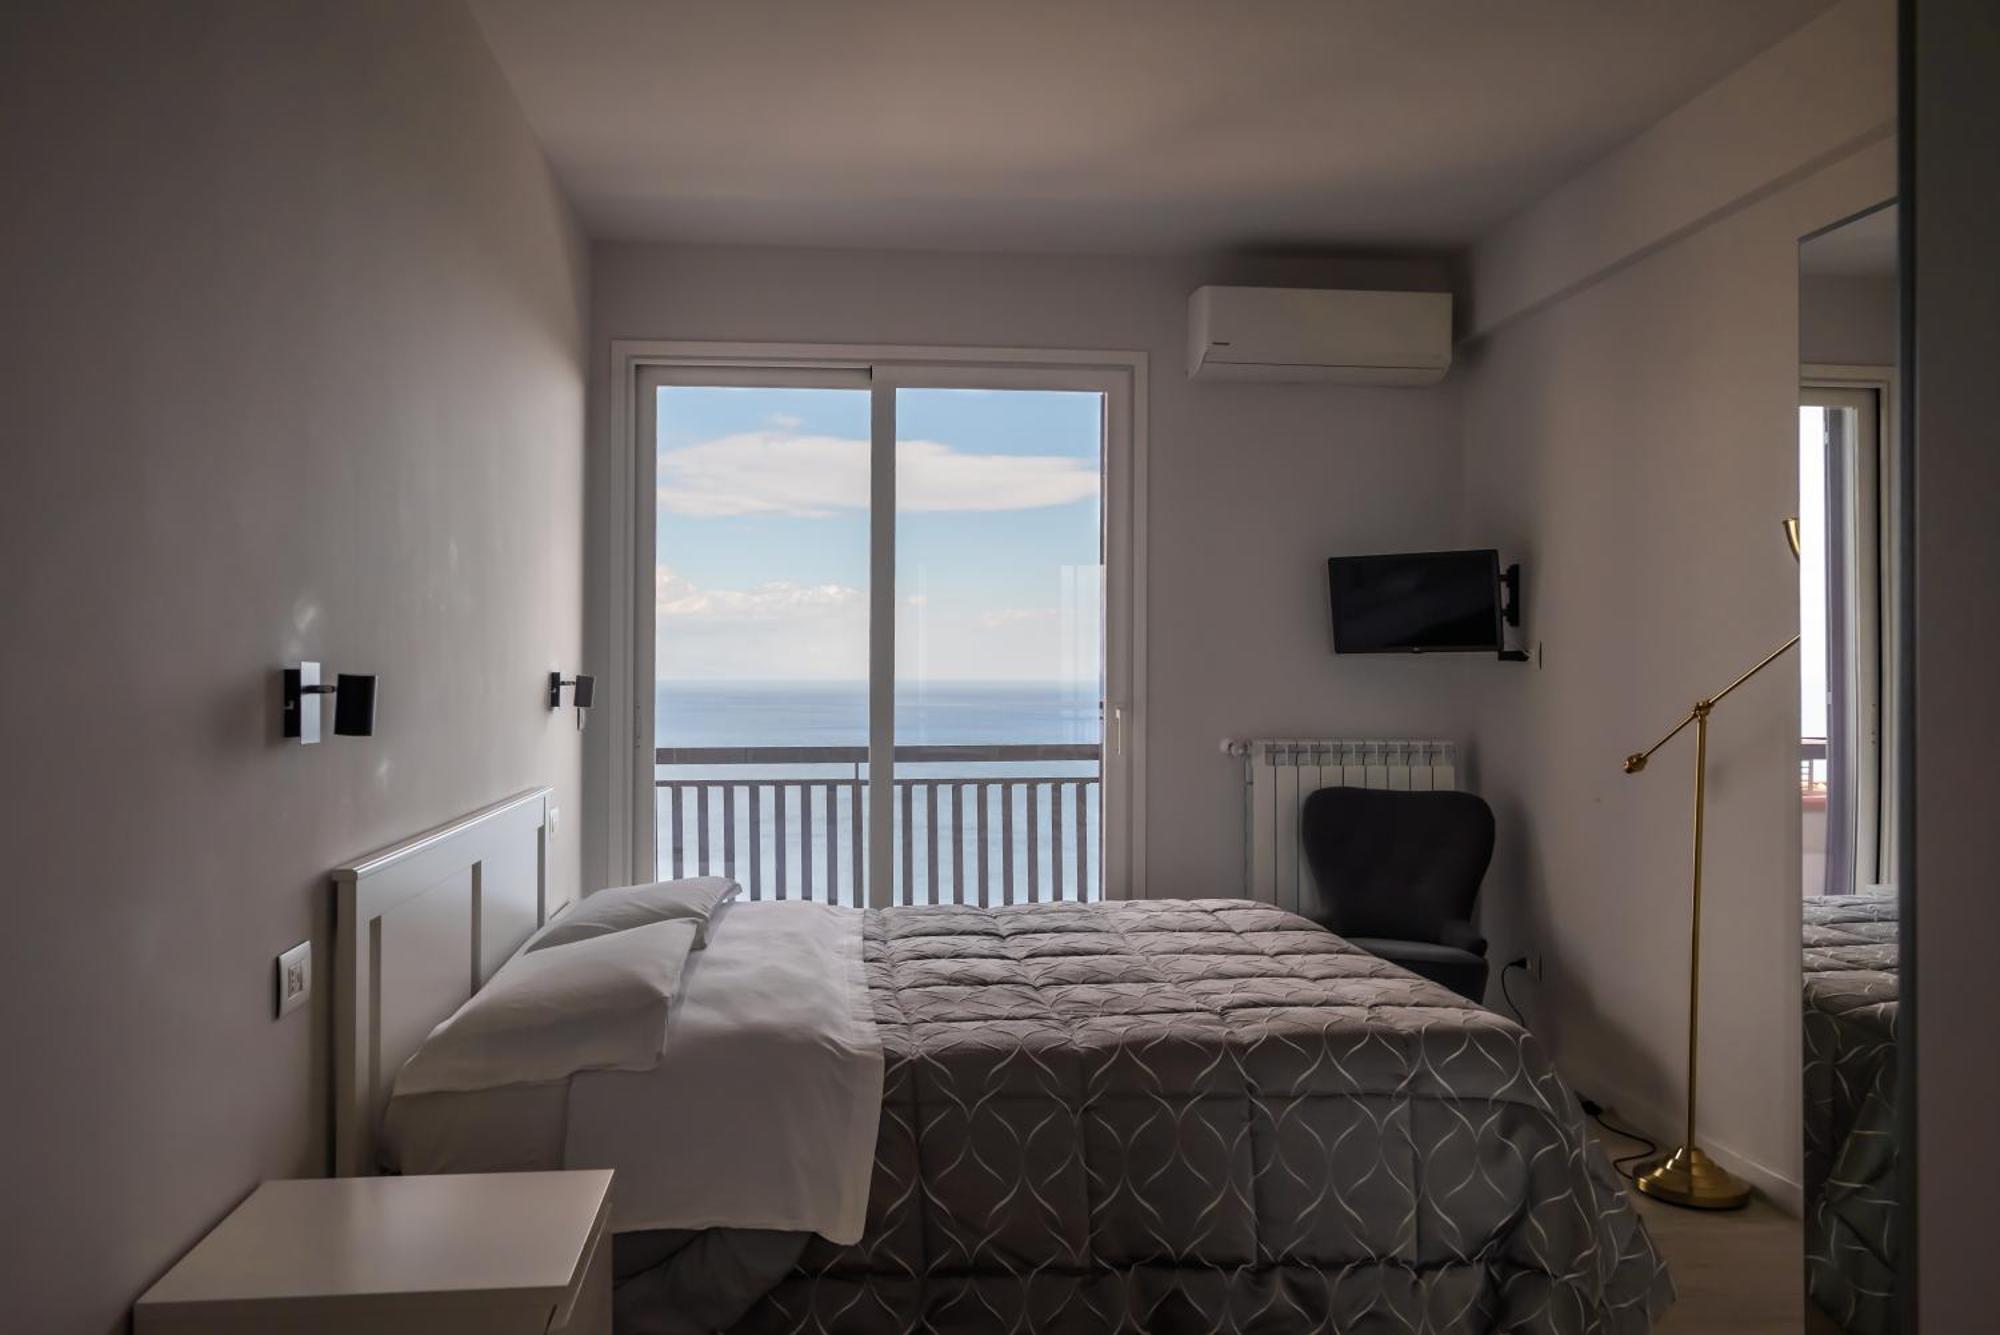 Blue Marine Taormina公寓 外观 照片